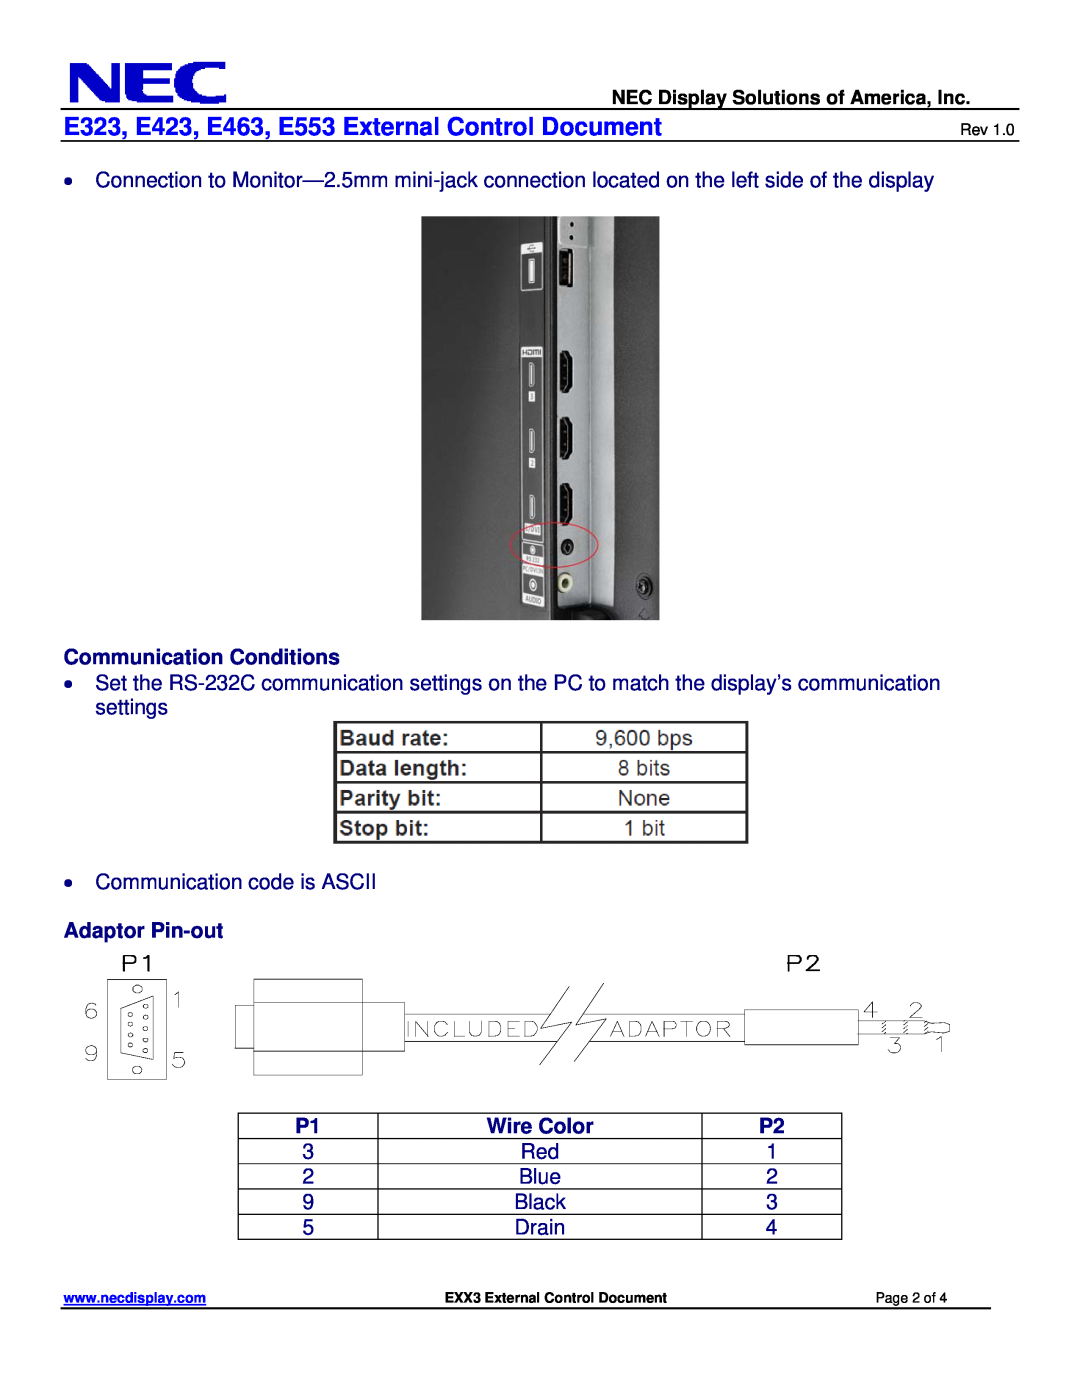 NEC manual E323, E423, E463, E553 External Control Document, Communication Conditions, Adaptor Pin-out, Wire Color 